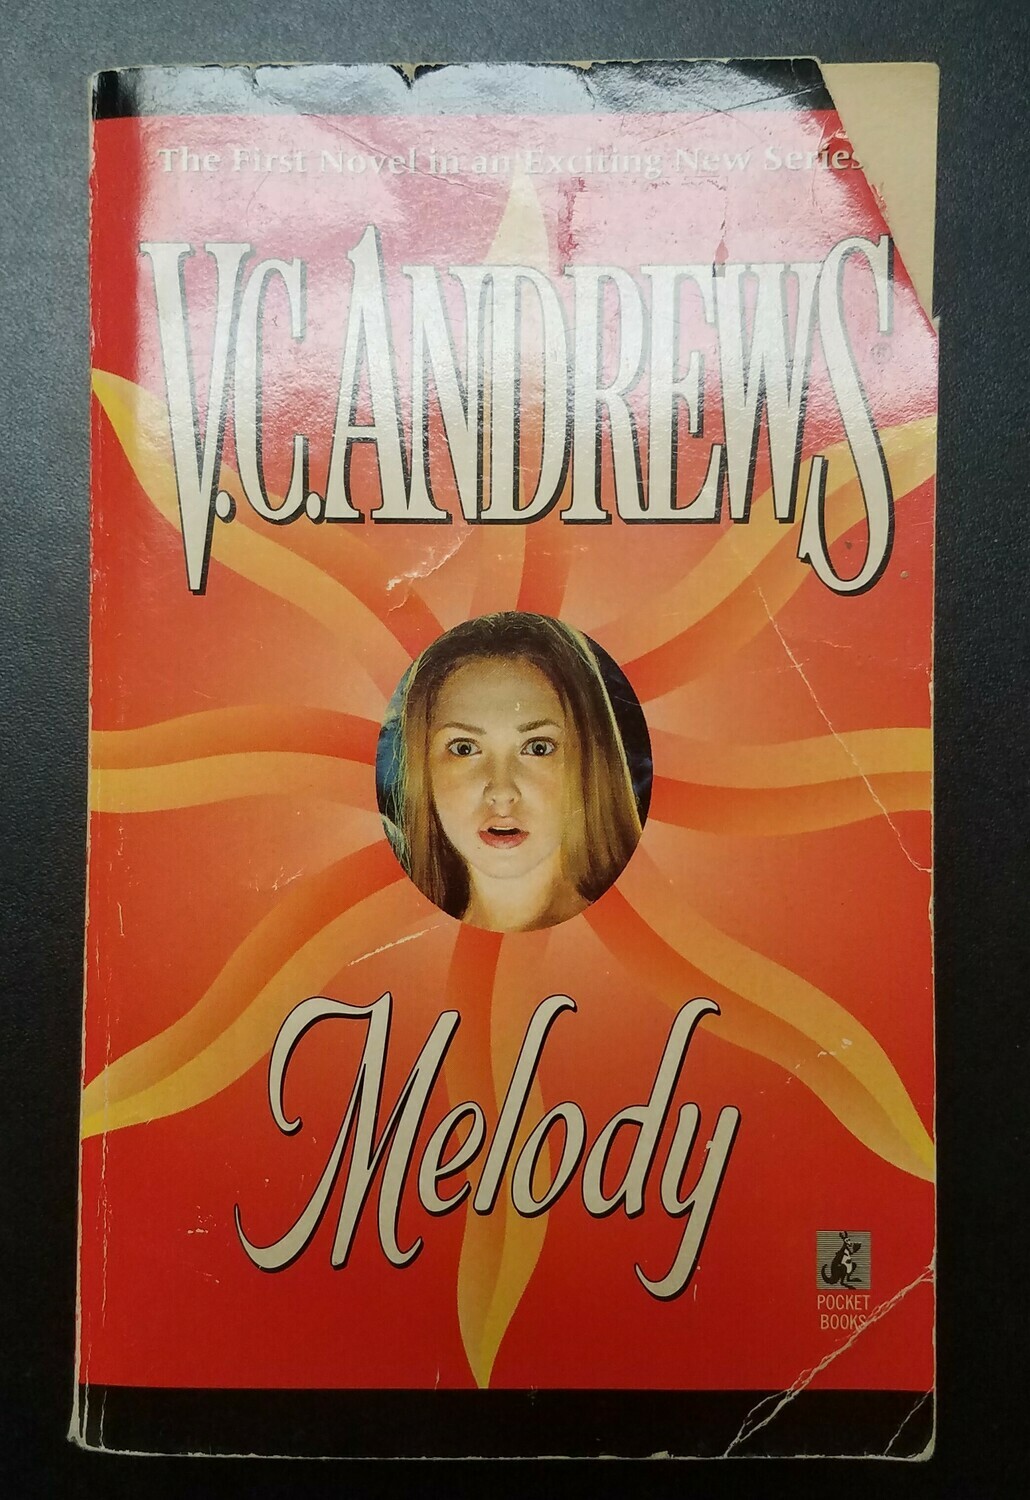 Melody by V.C. Andrews